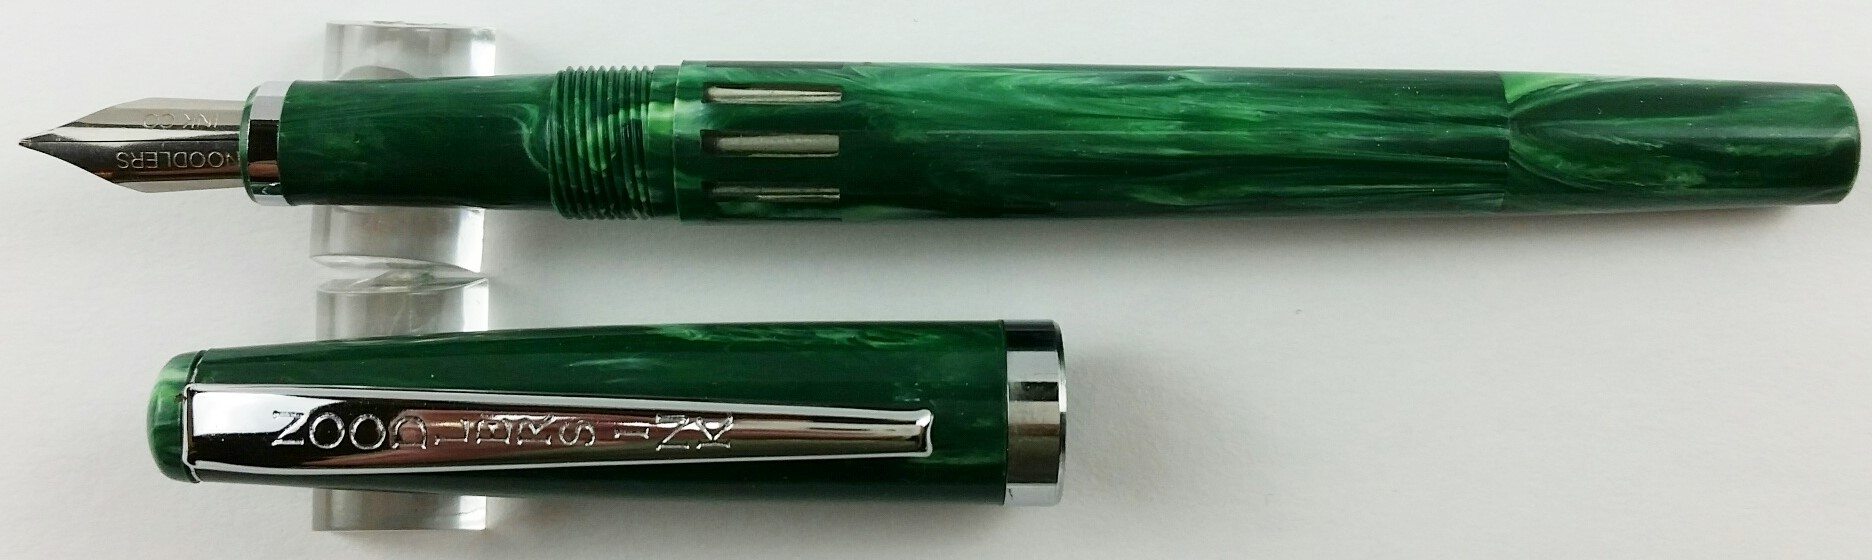 Noodler's Jade Standard Flex Fountain Pen